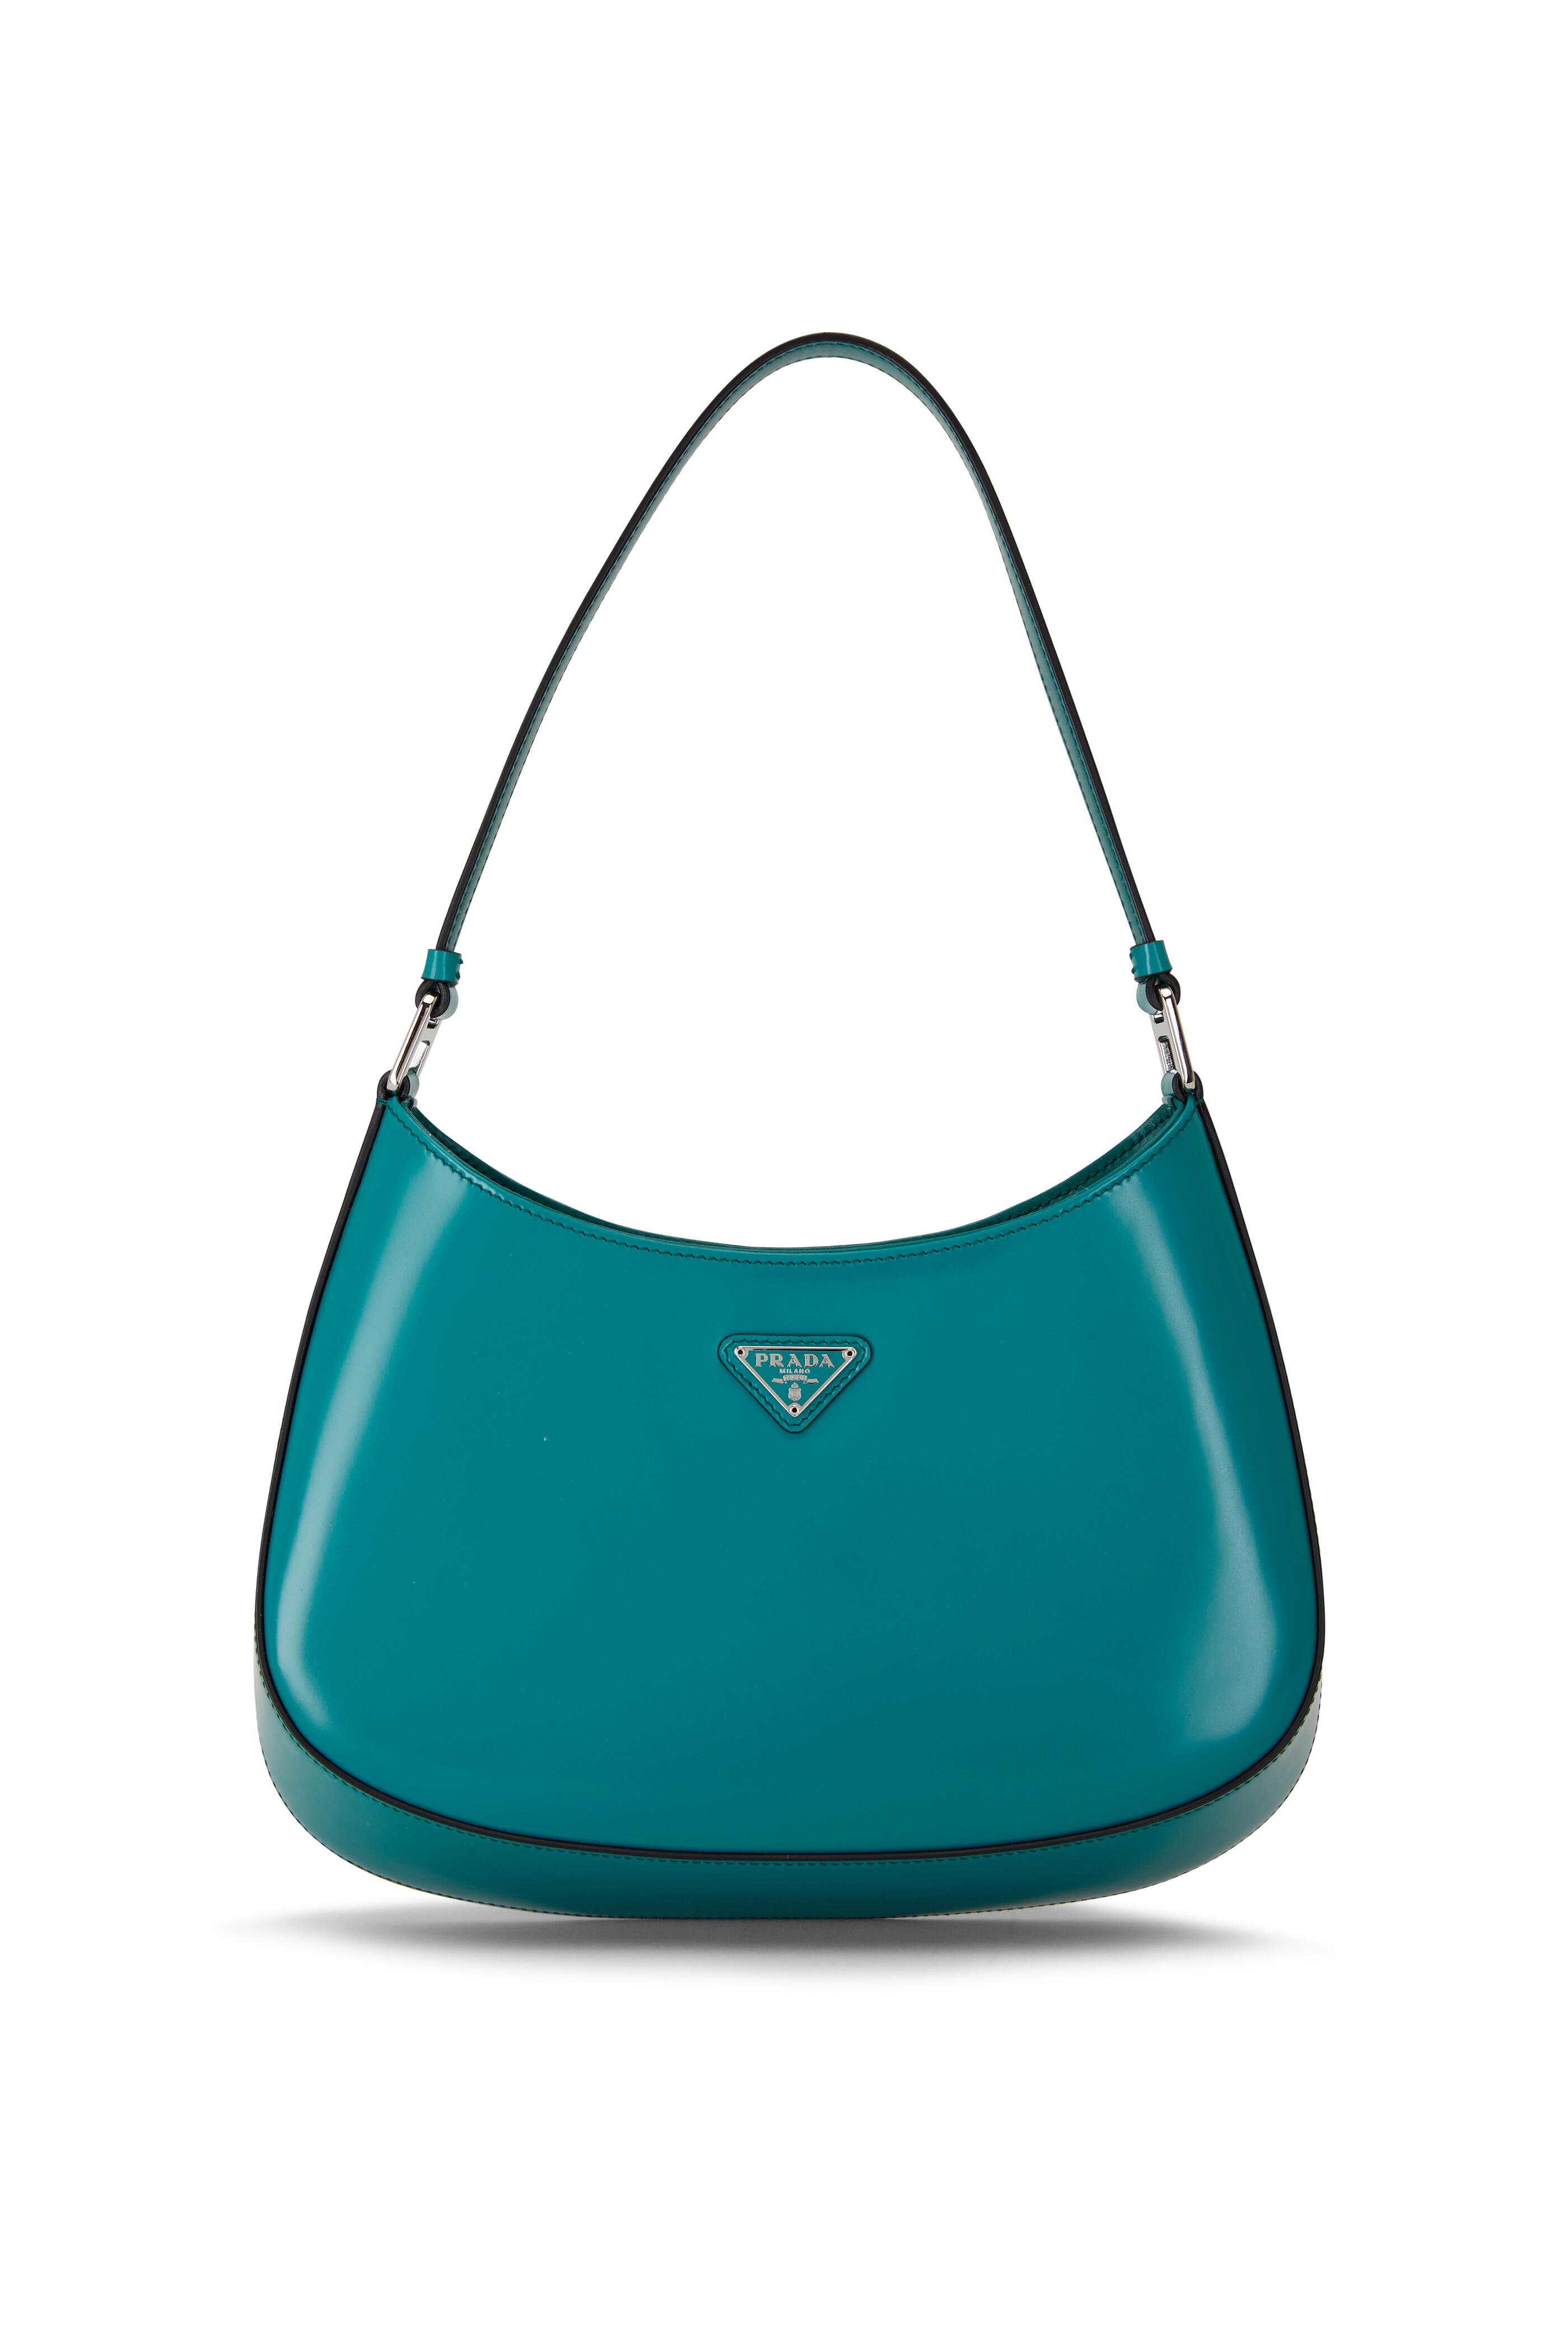 Prada - Cleo Bright Blue Smooth Leather Shoulder Bag